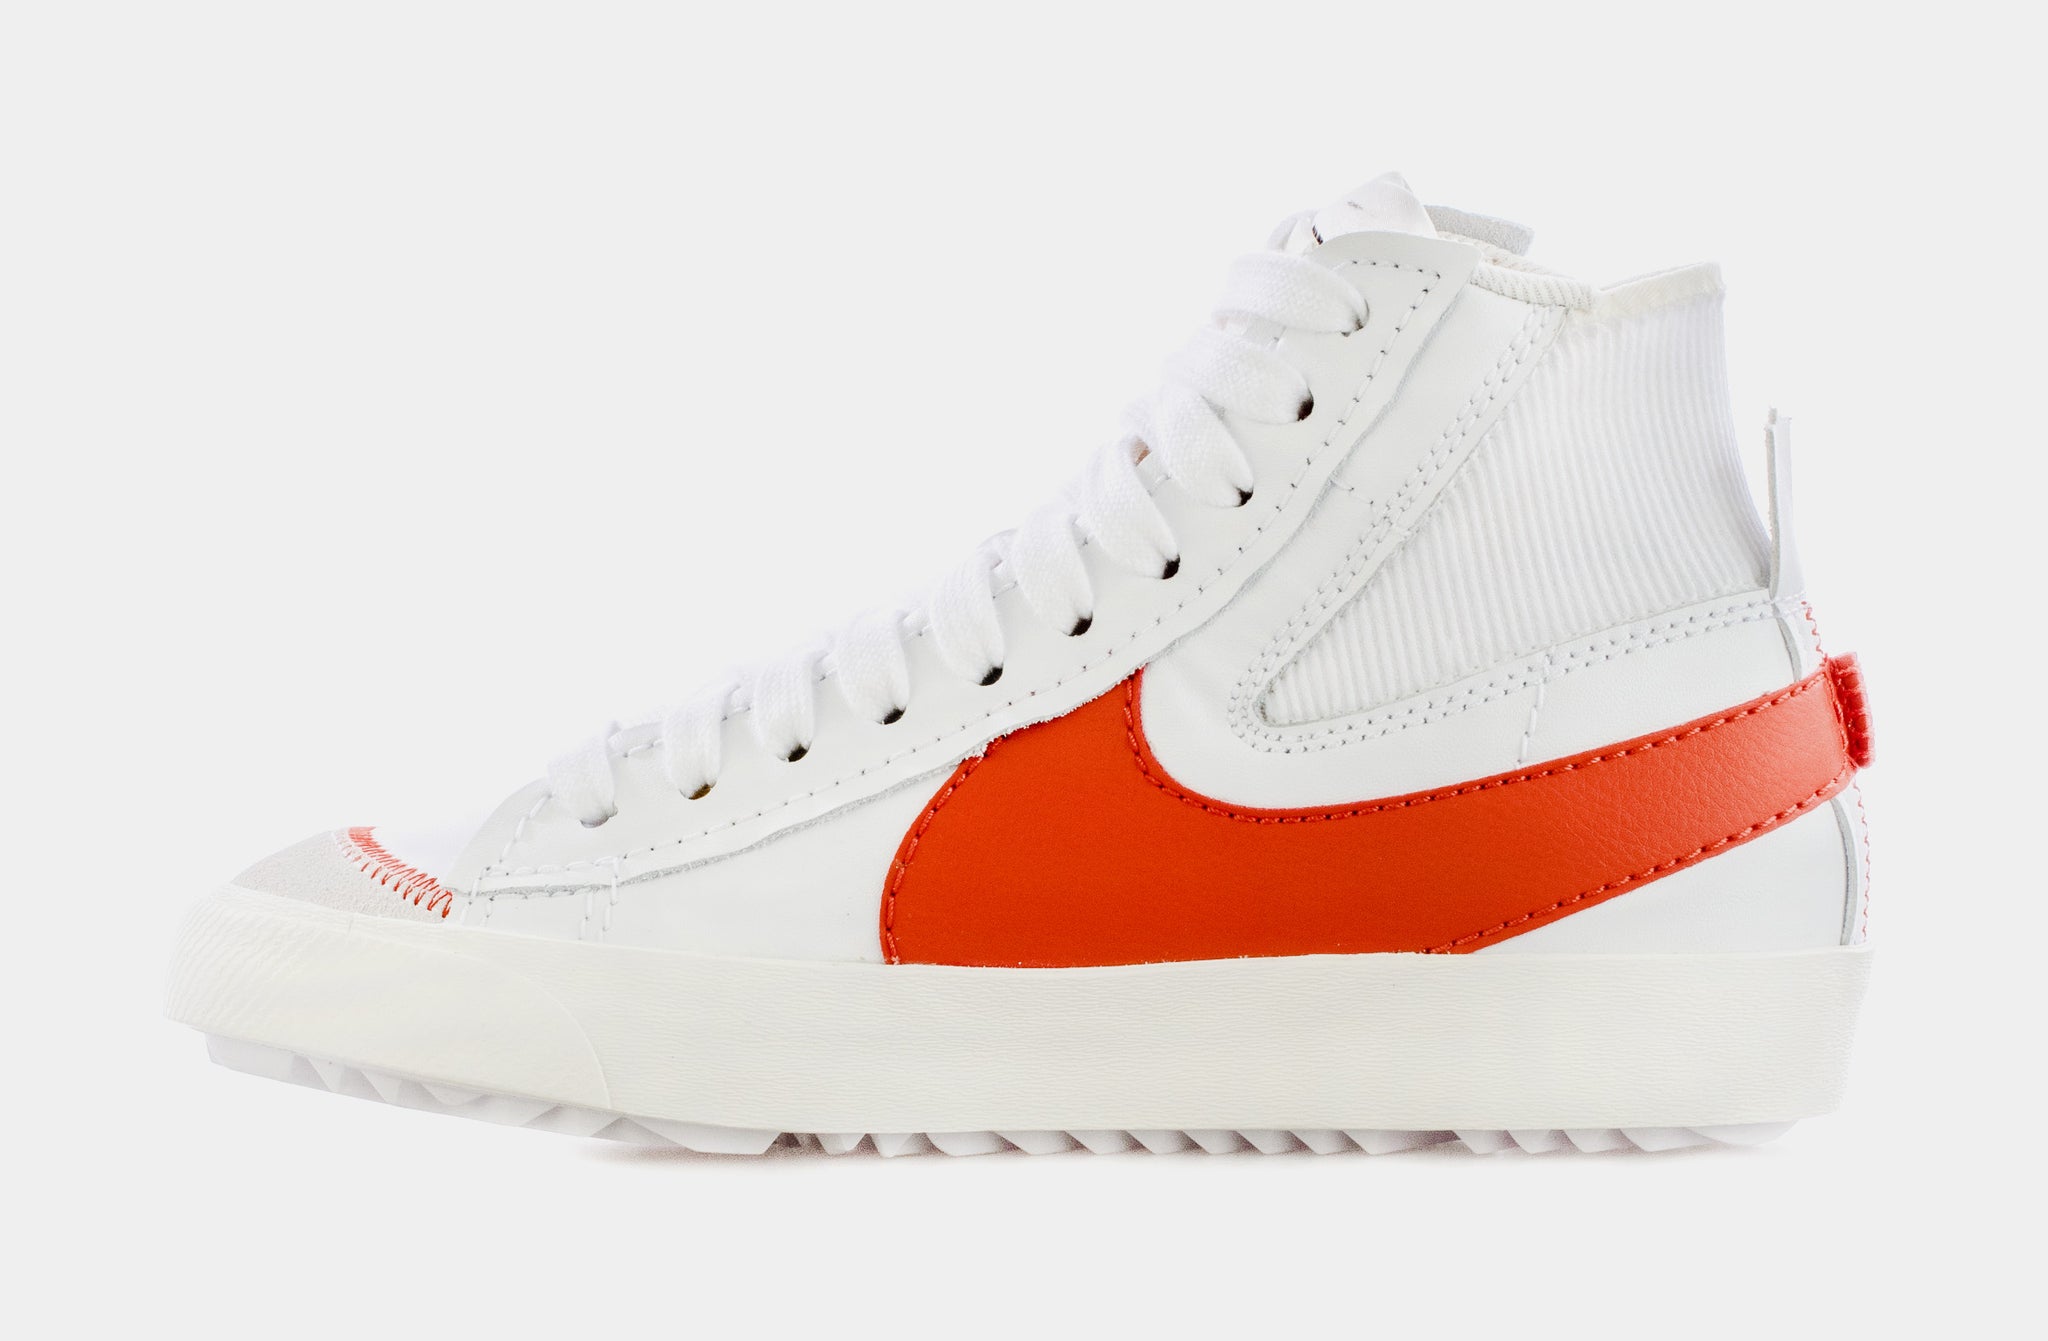 Nike Blazer Mid '77 Sneakers in Orange